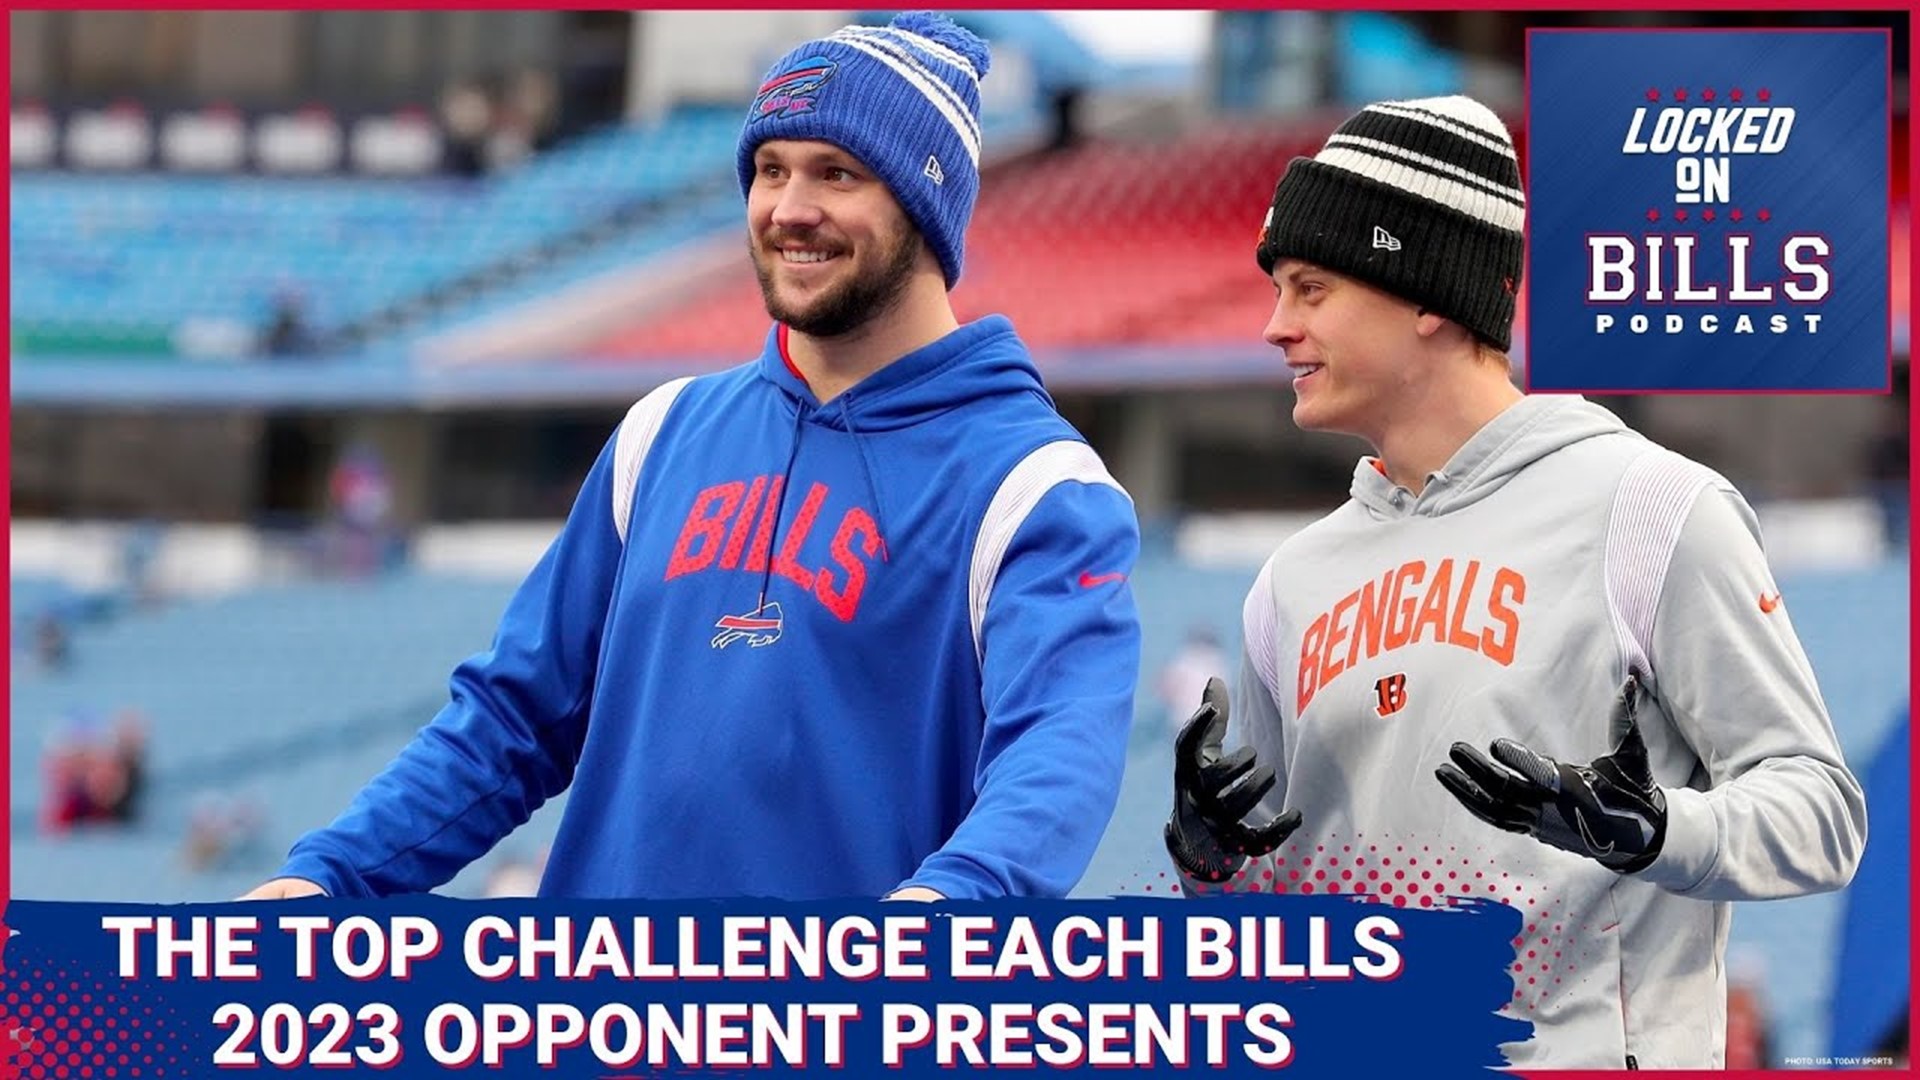 Buffalo Bills schedule released, features plenty of primetime games -  Buffalo Rumblings